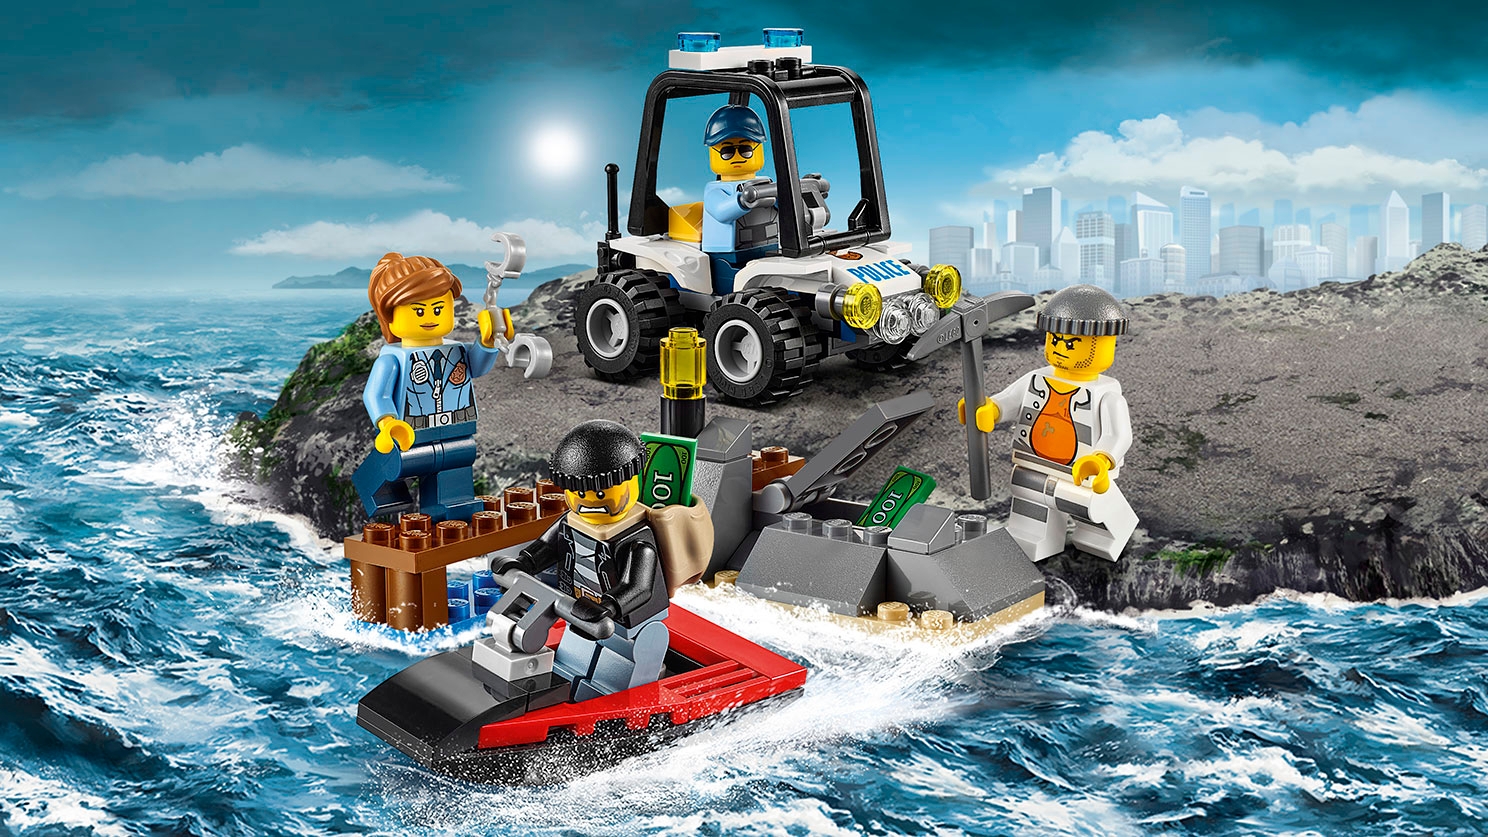 LEGO City Gefängnisinsel in Aktion - Gefängnisinsel-Polizei Starterset 60127